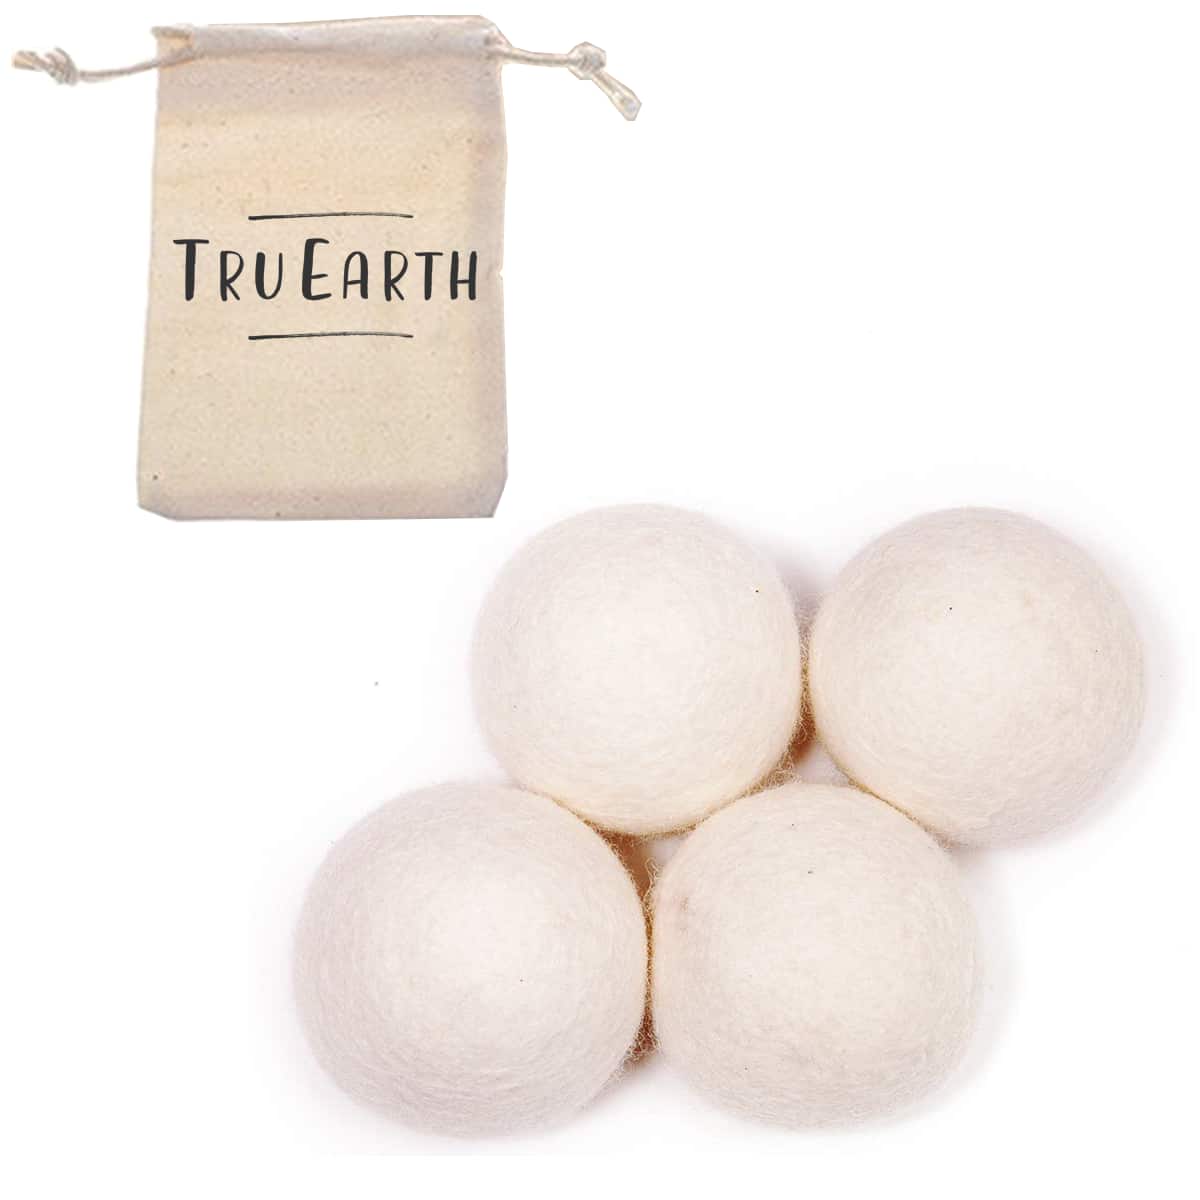 Tru Earth Wool Dryer Balls - Black Friday Sale